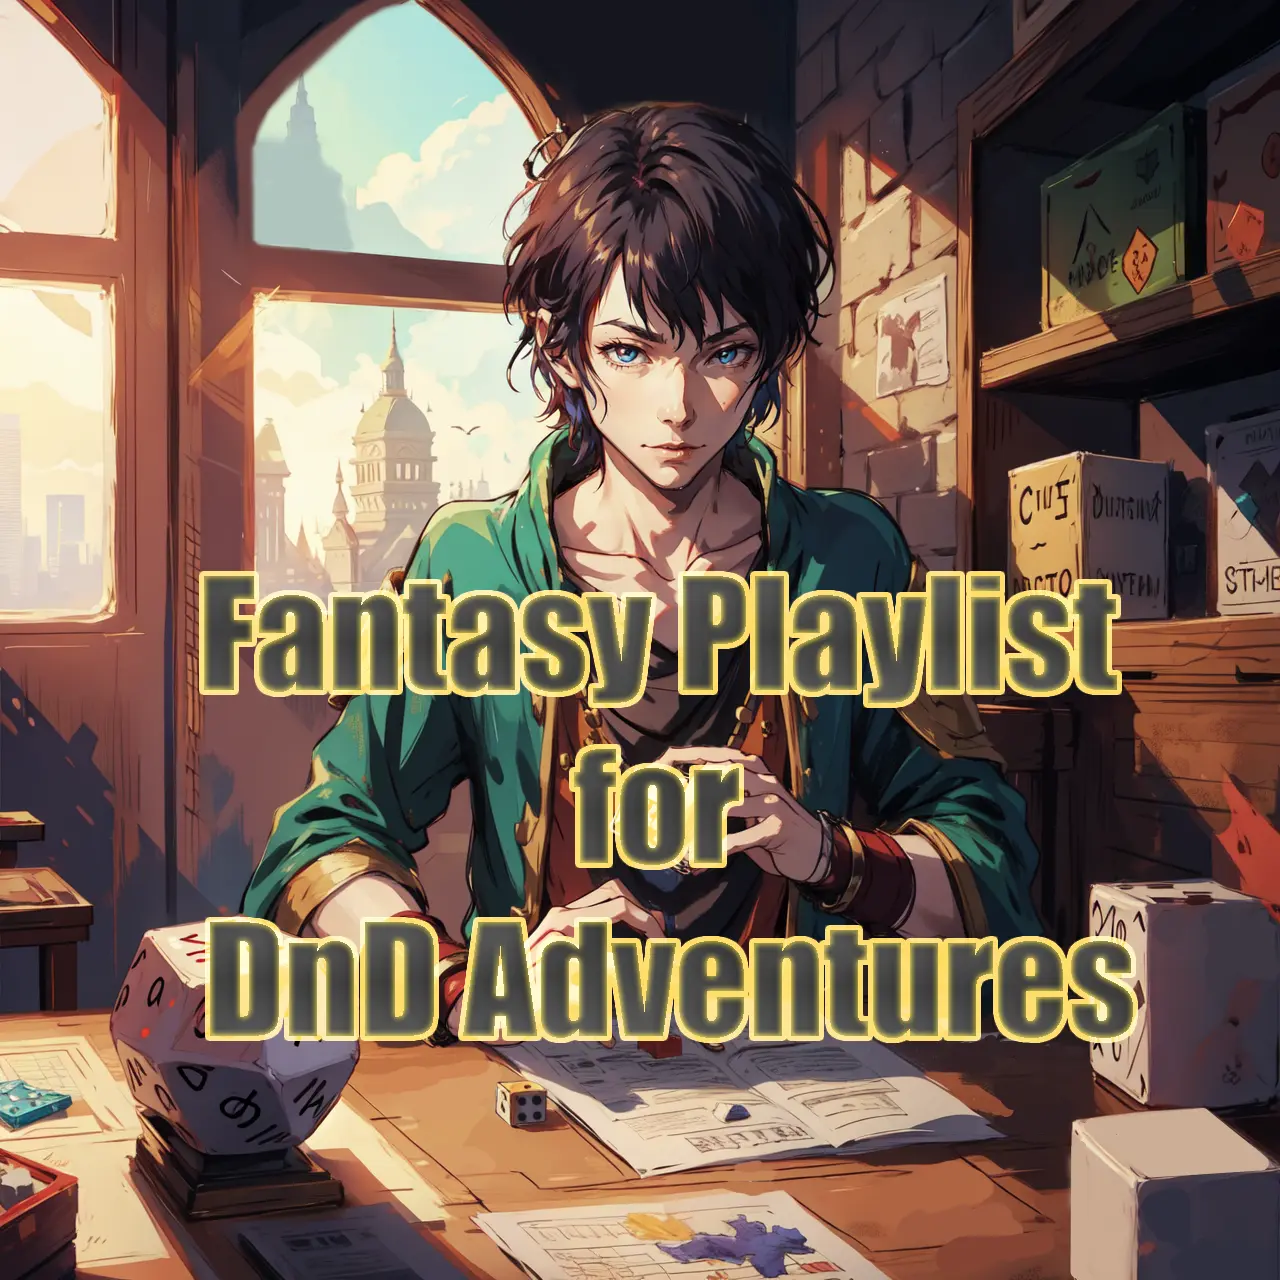 Fantasy Playlist for DnD Adventures